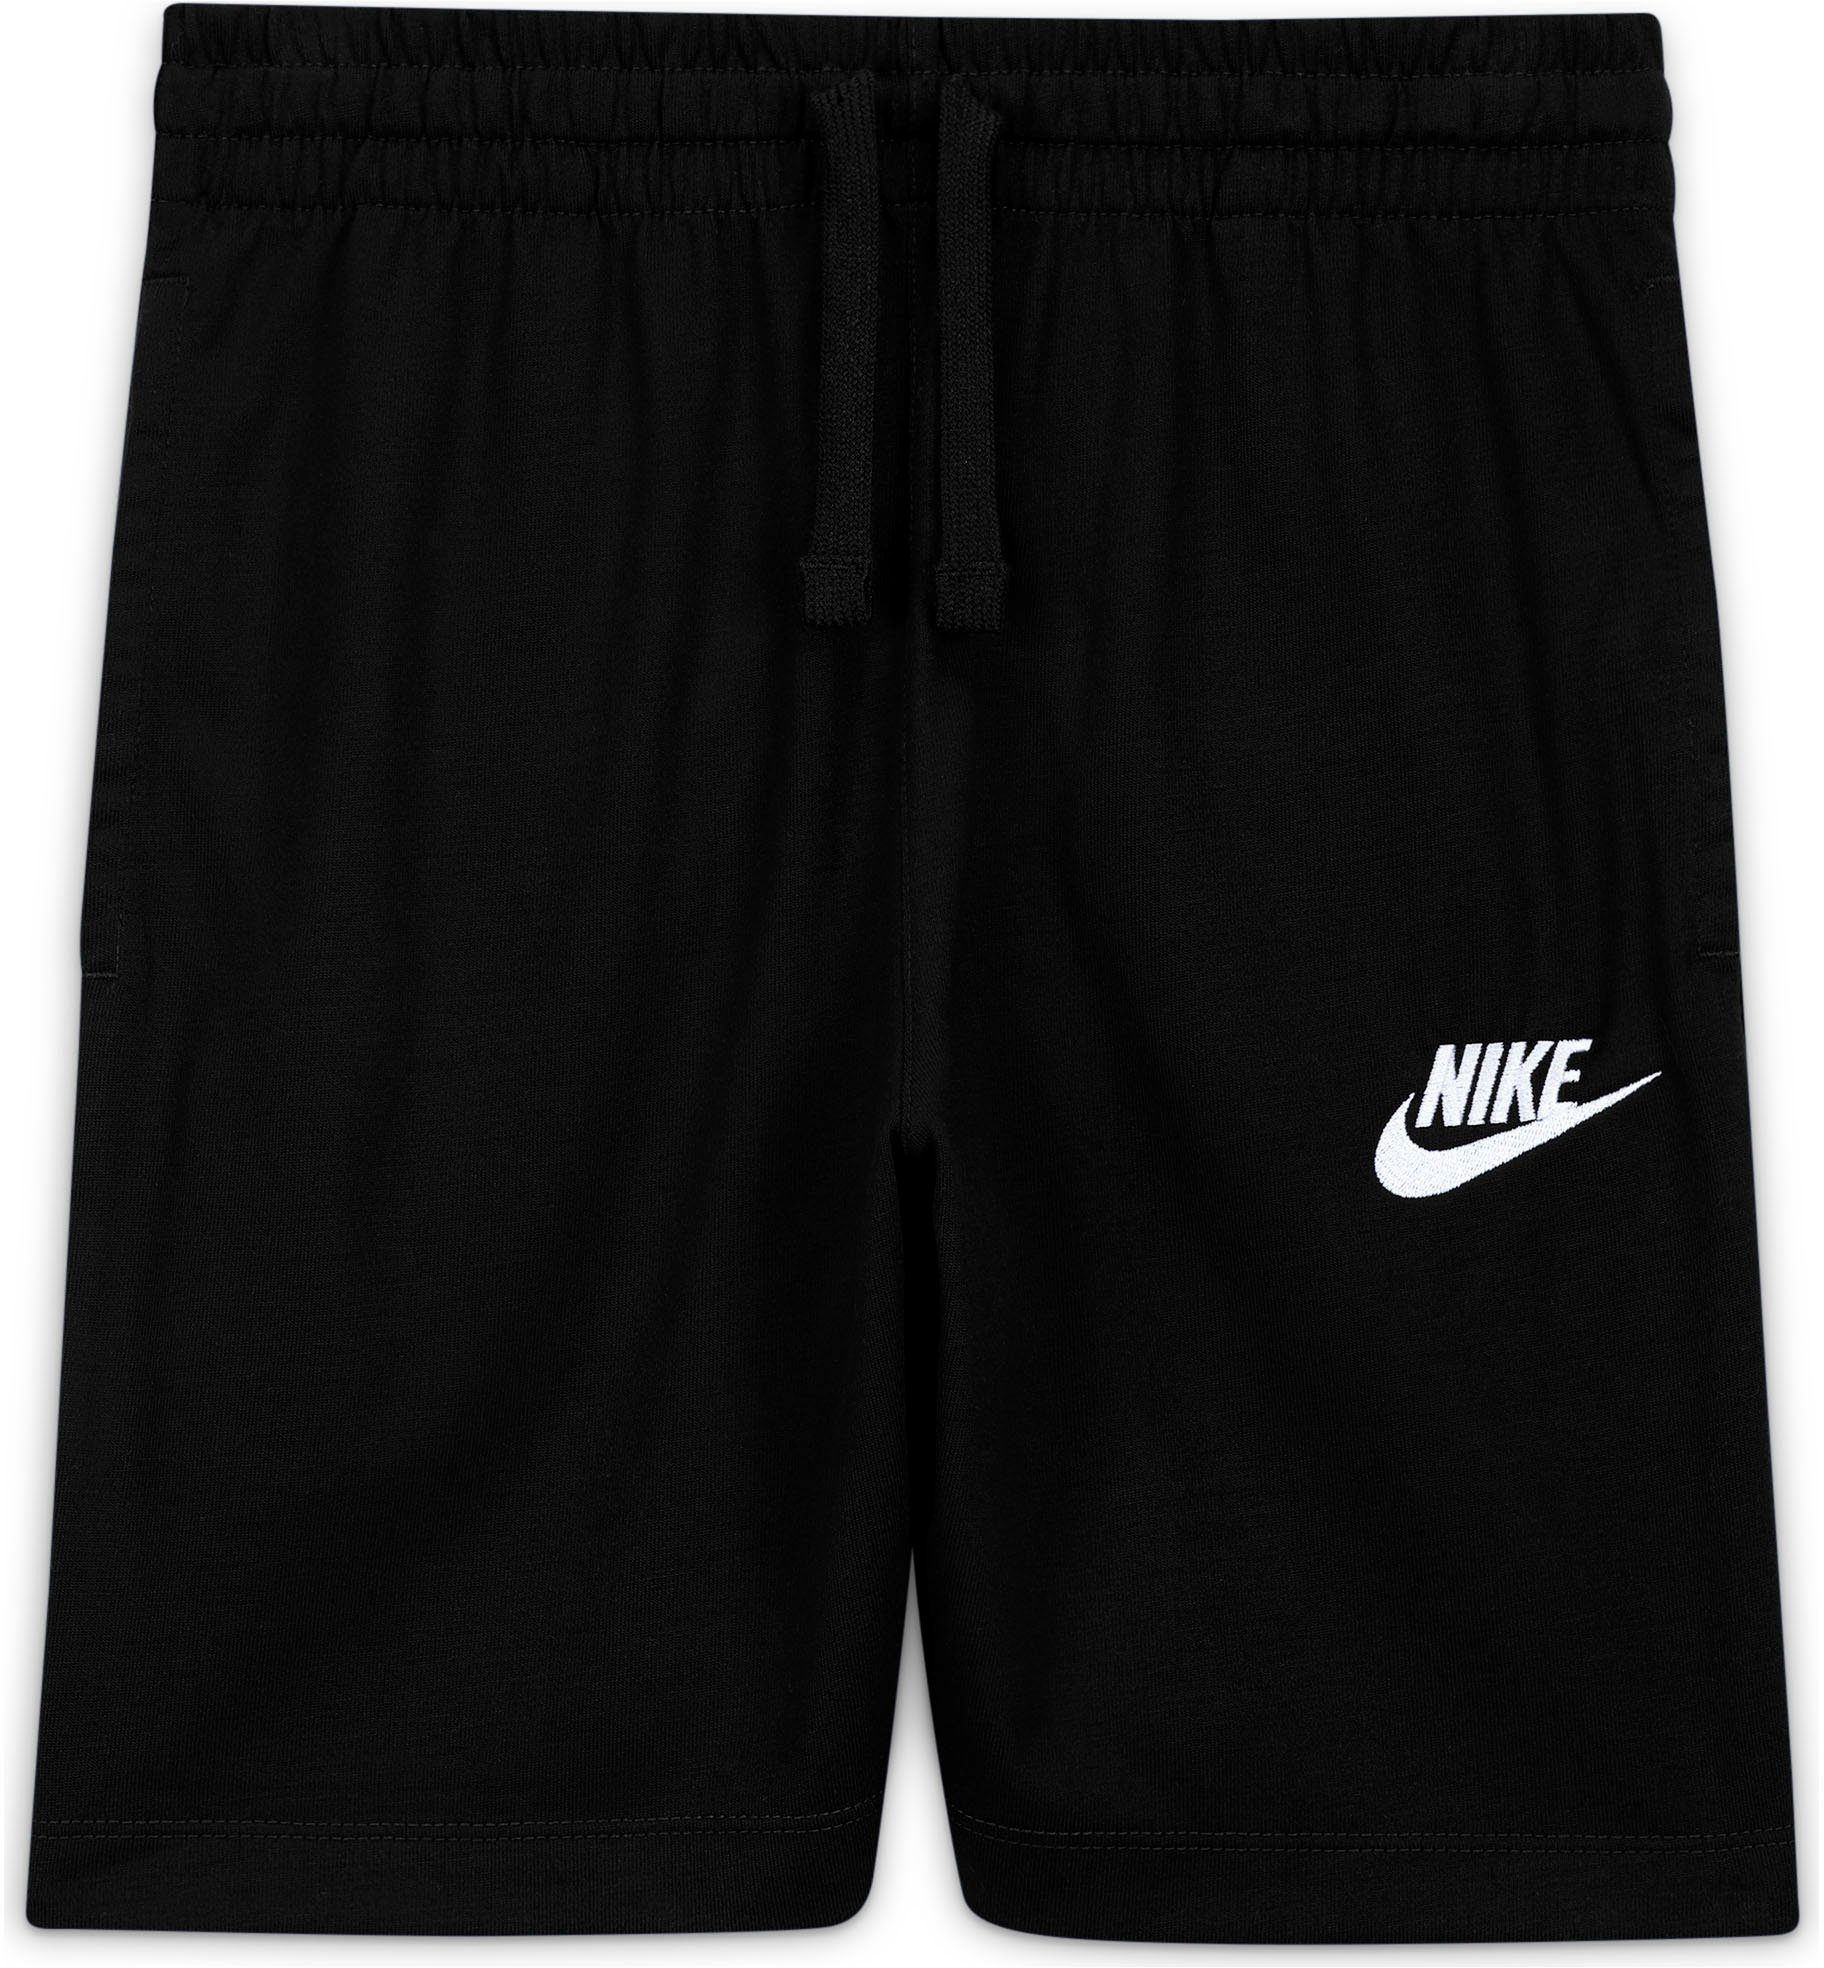 Nike Sportswear Shorts (BOYS) schwarz BIG SHORTS KIDS' JERSEY